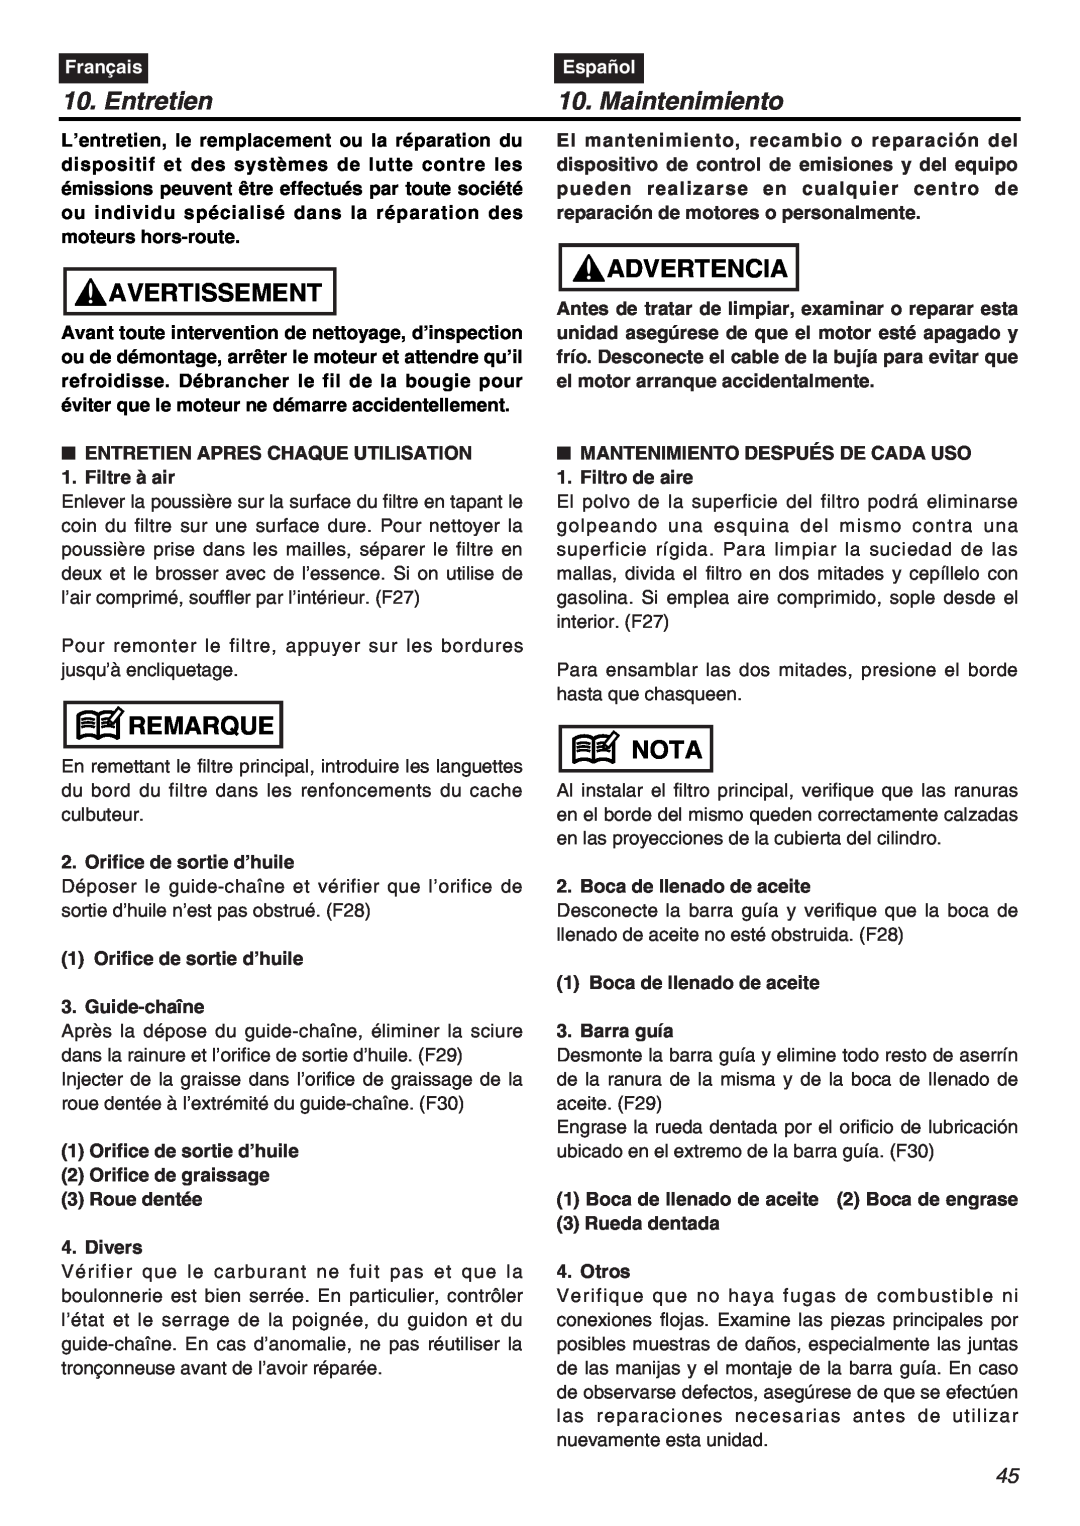 Zenoah G3800AVS manual Entretien, Maintenimiento, Avertissement, Remarque, Advertencia, Nota, Français, Español 